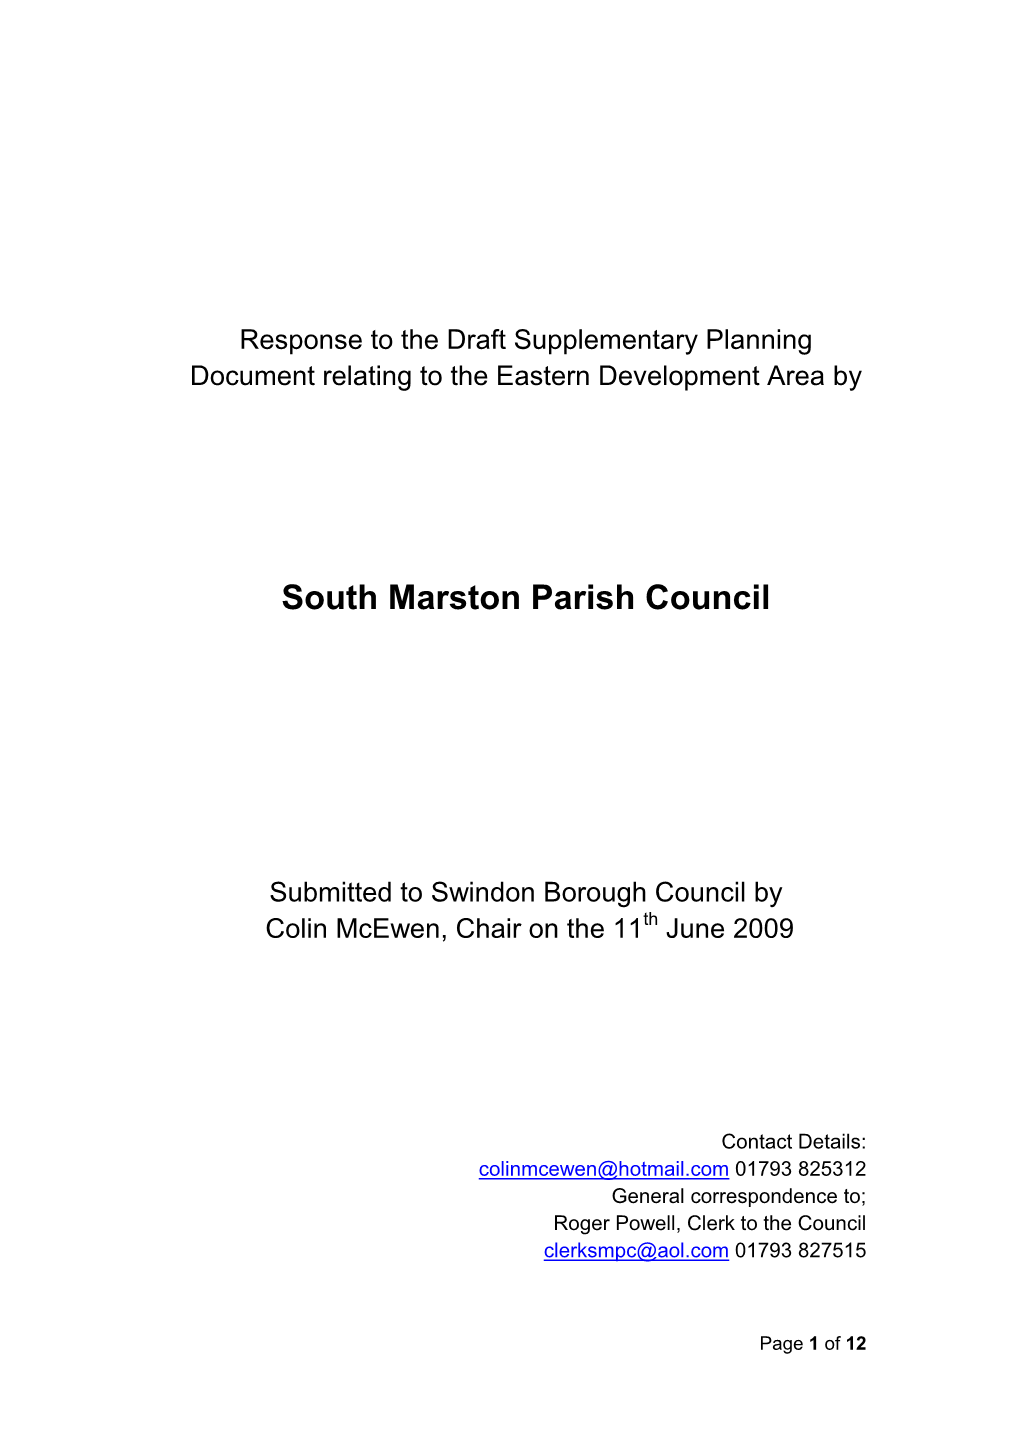 South Marston Parish Council